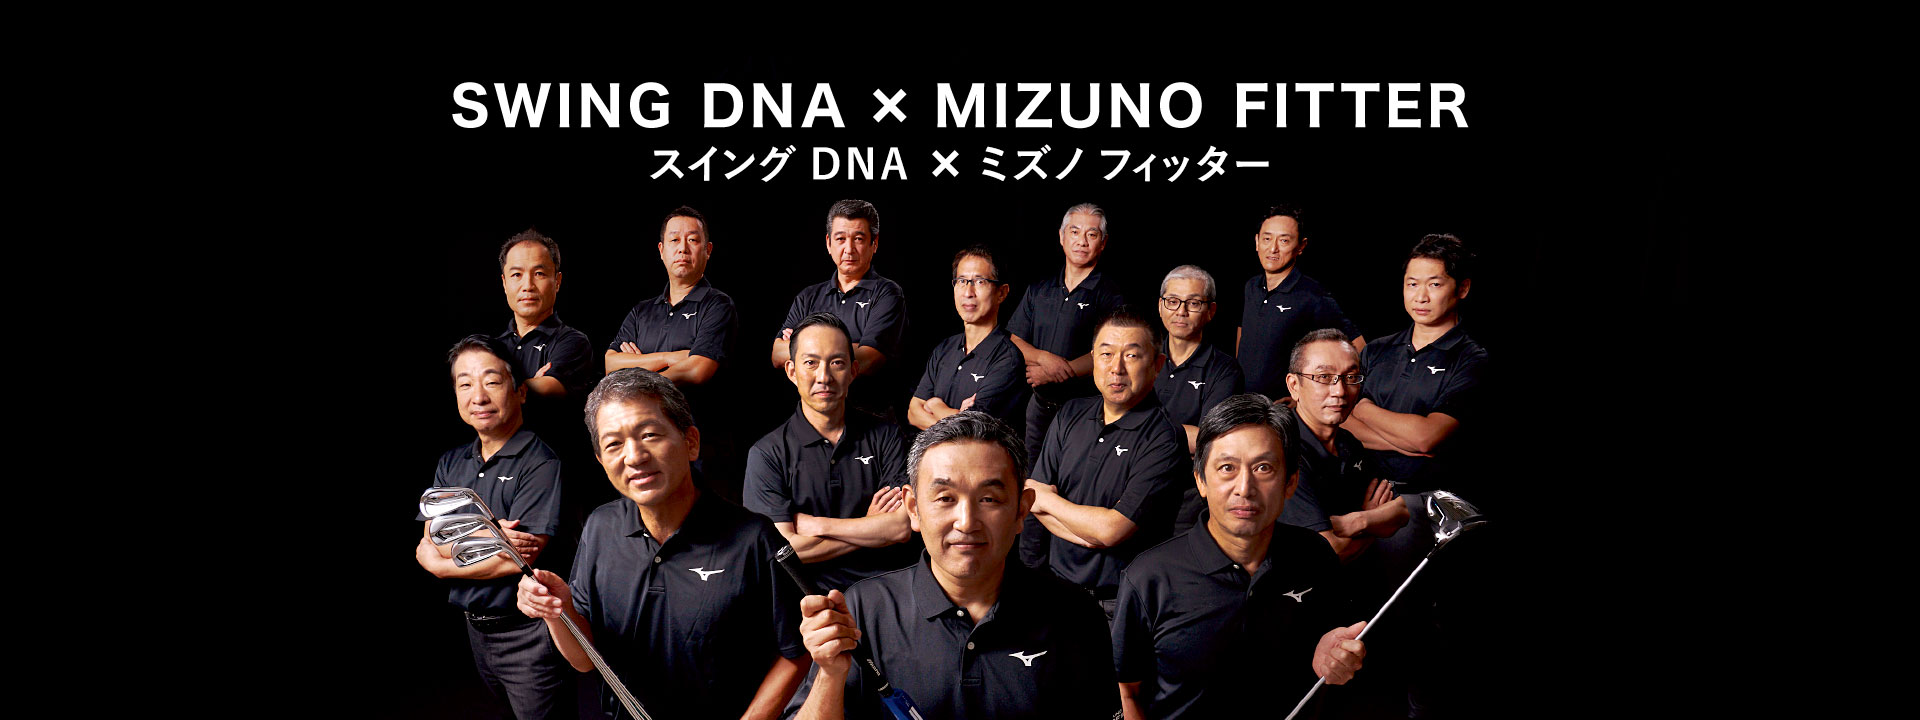 SWING DNA X MIZUNO FITTER